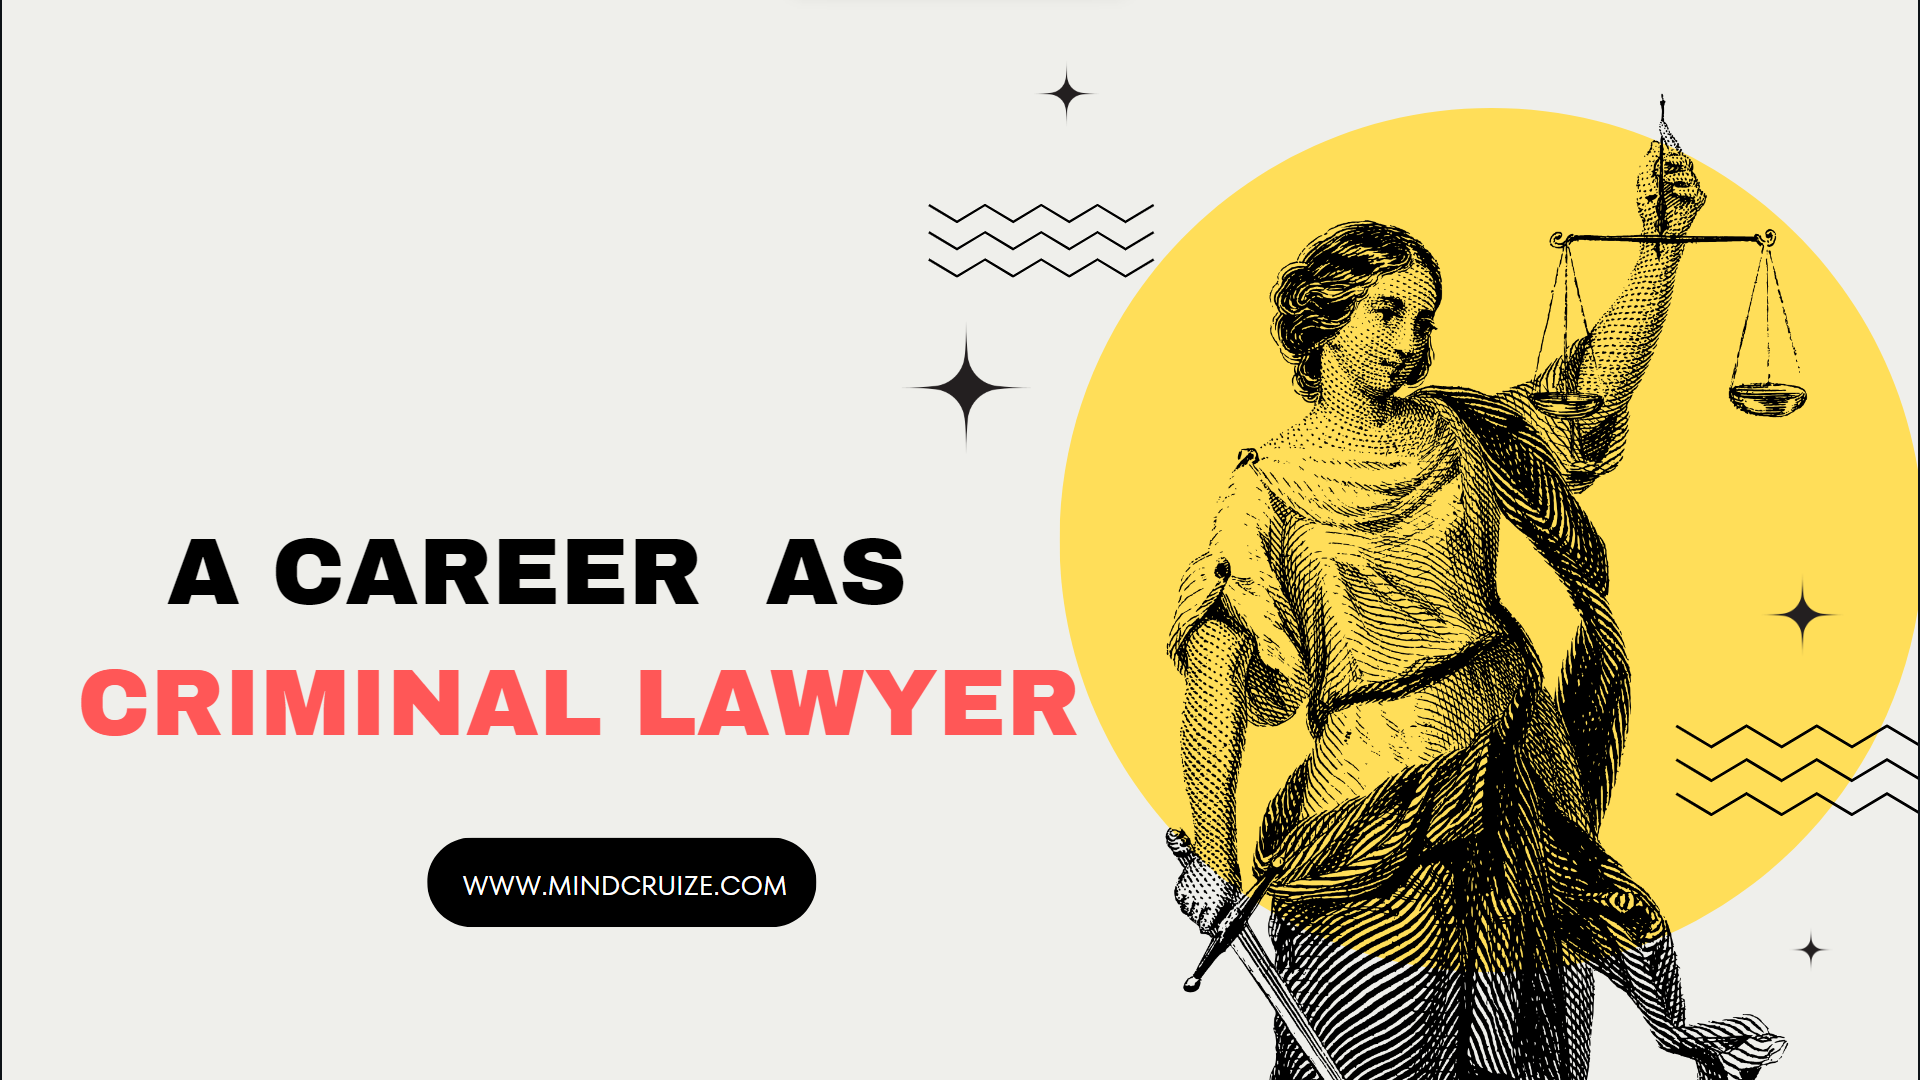 Career As a Criminal Lawyer